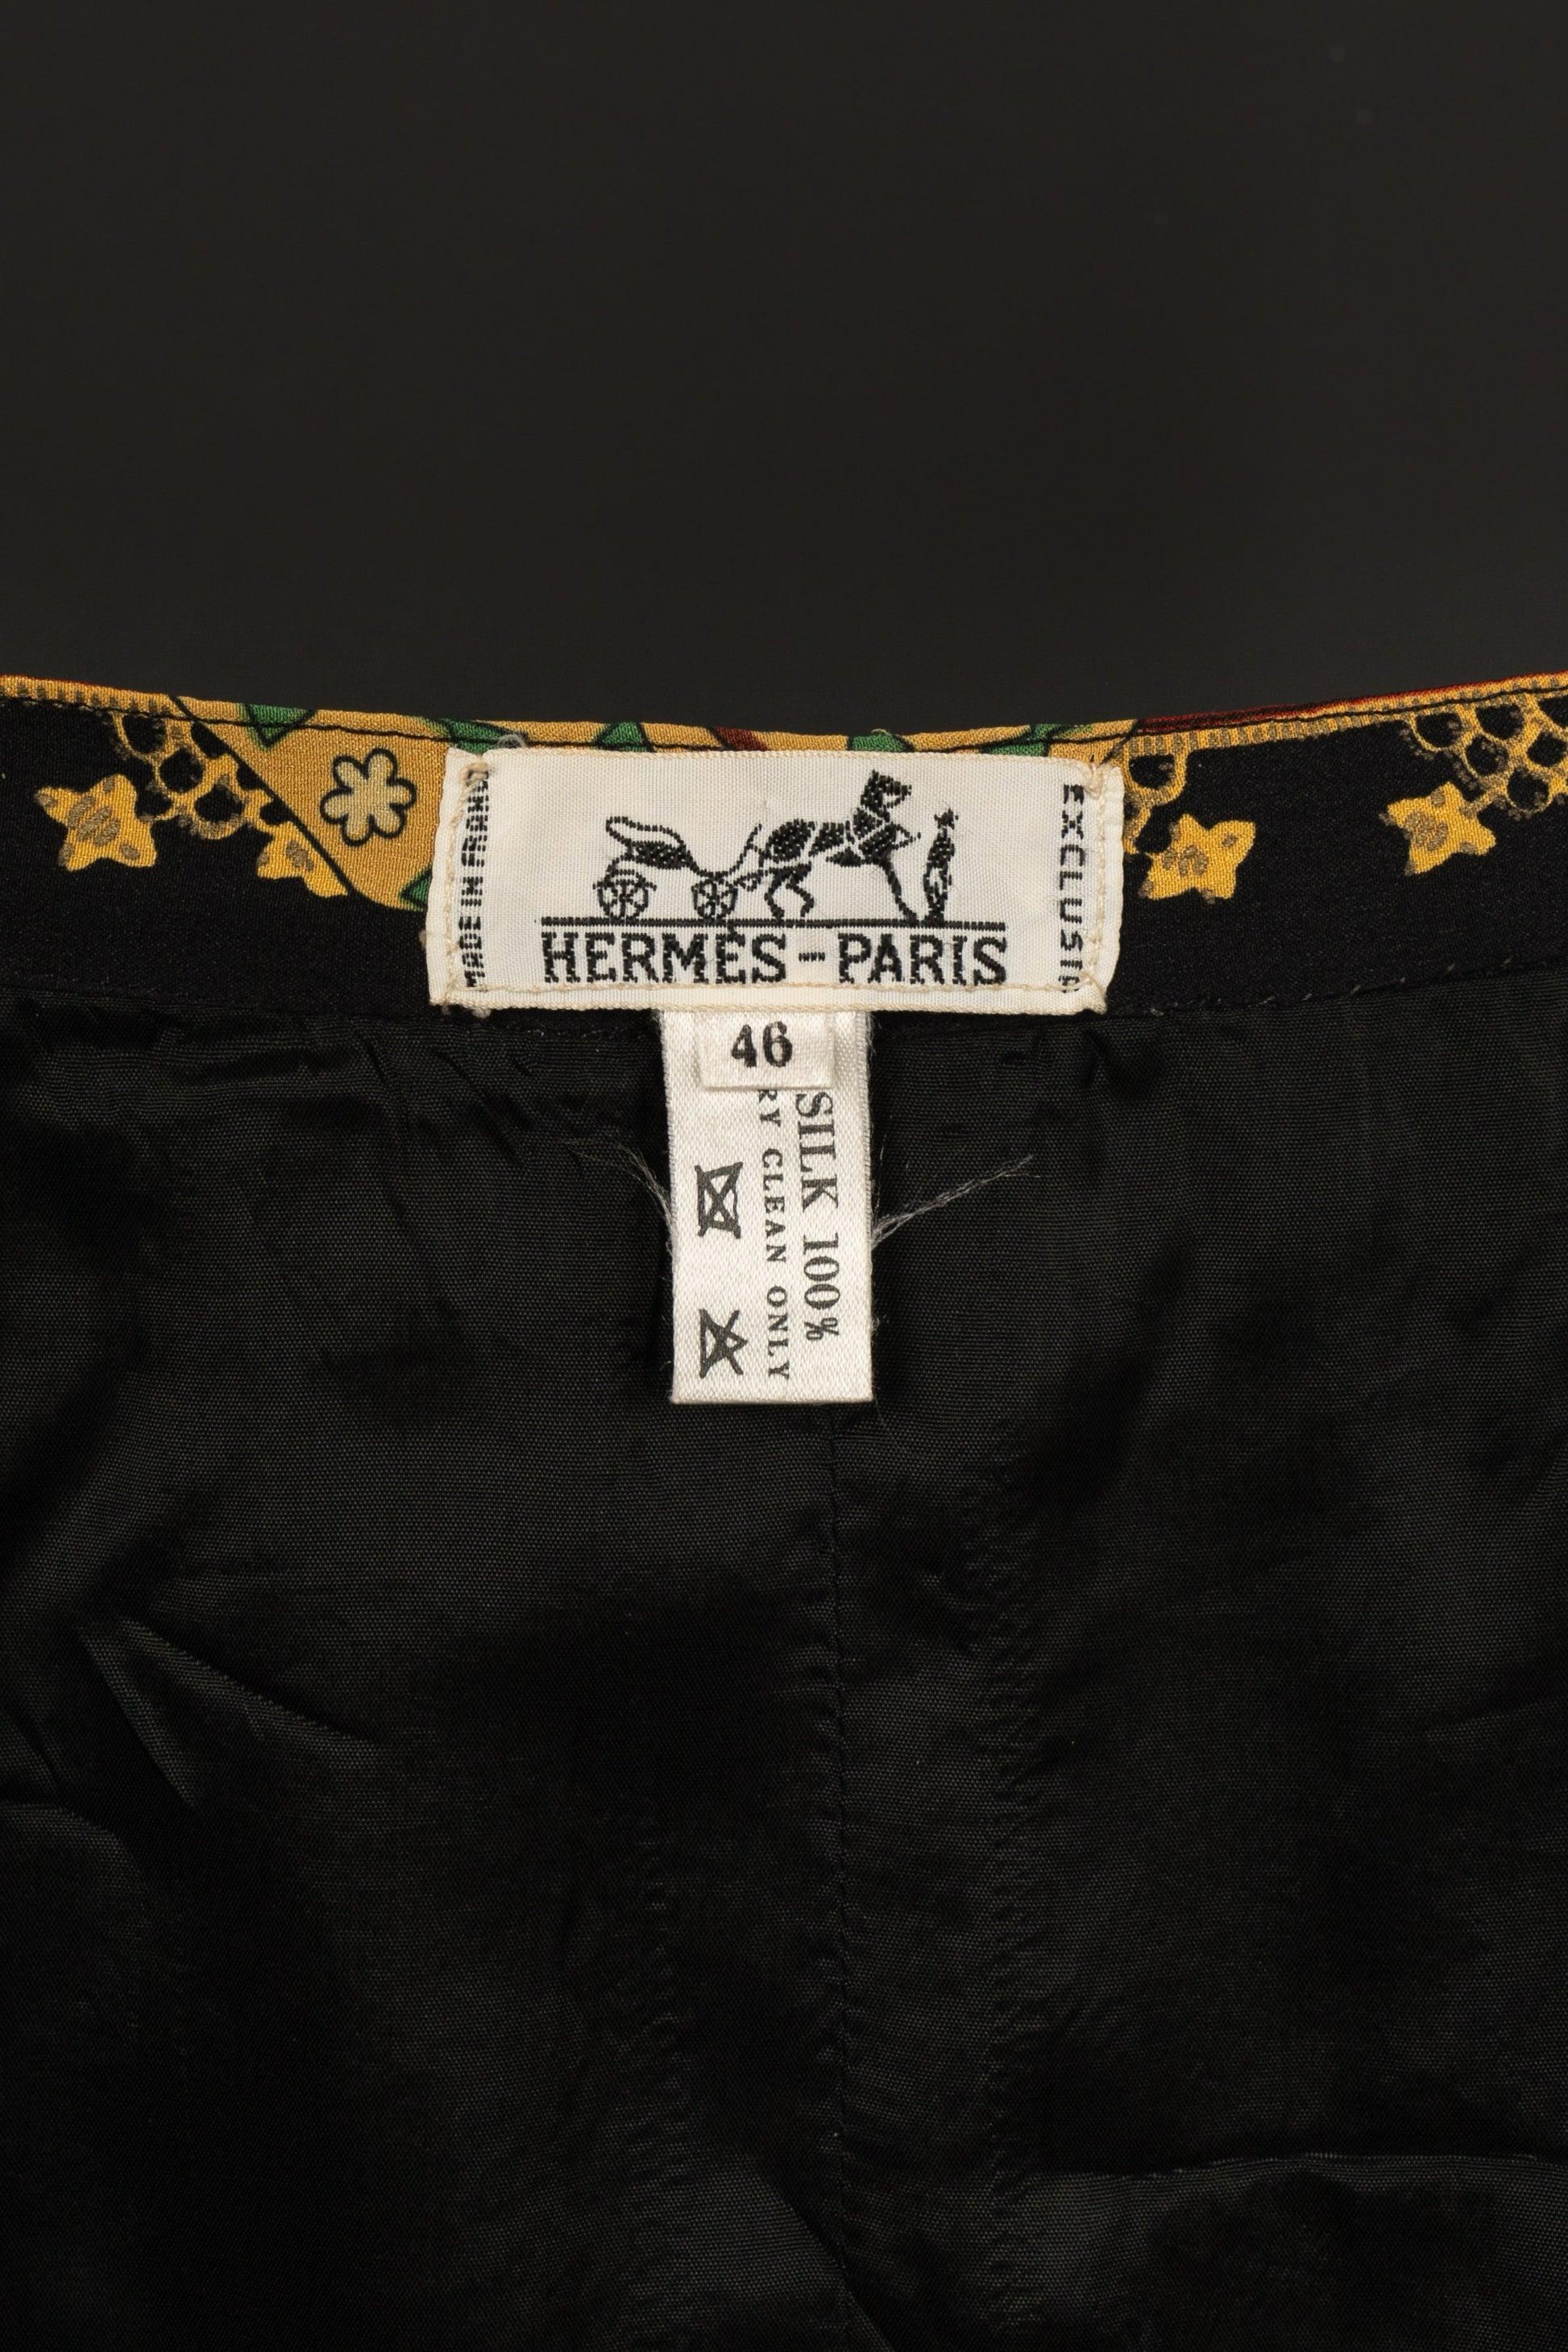 Hermès Silk Skirt Illustrated with Theme 